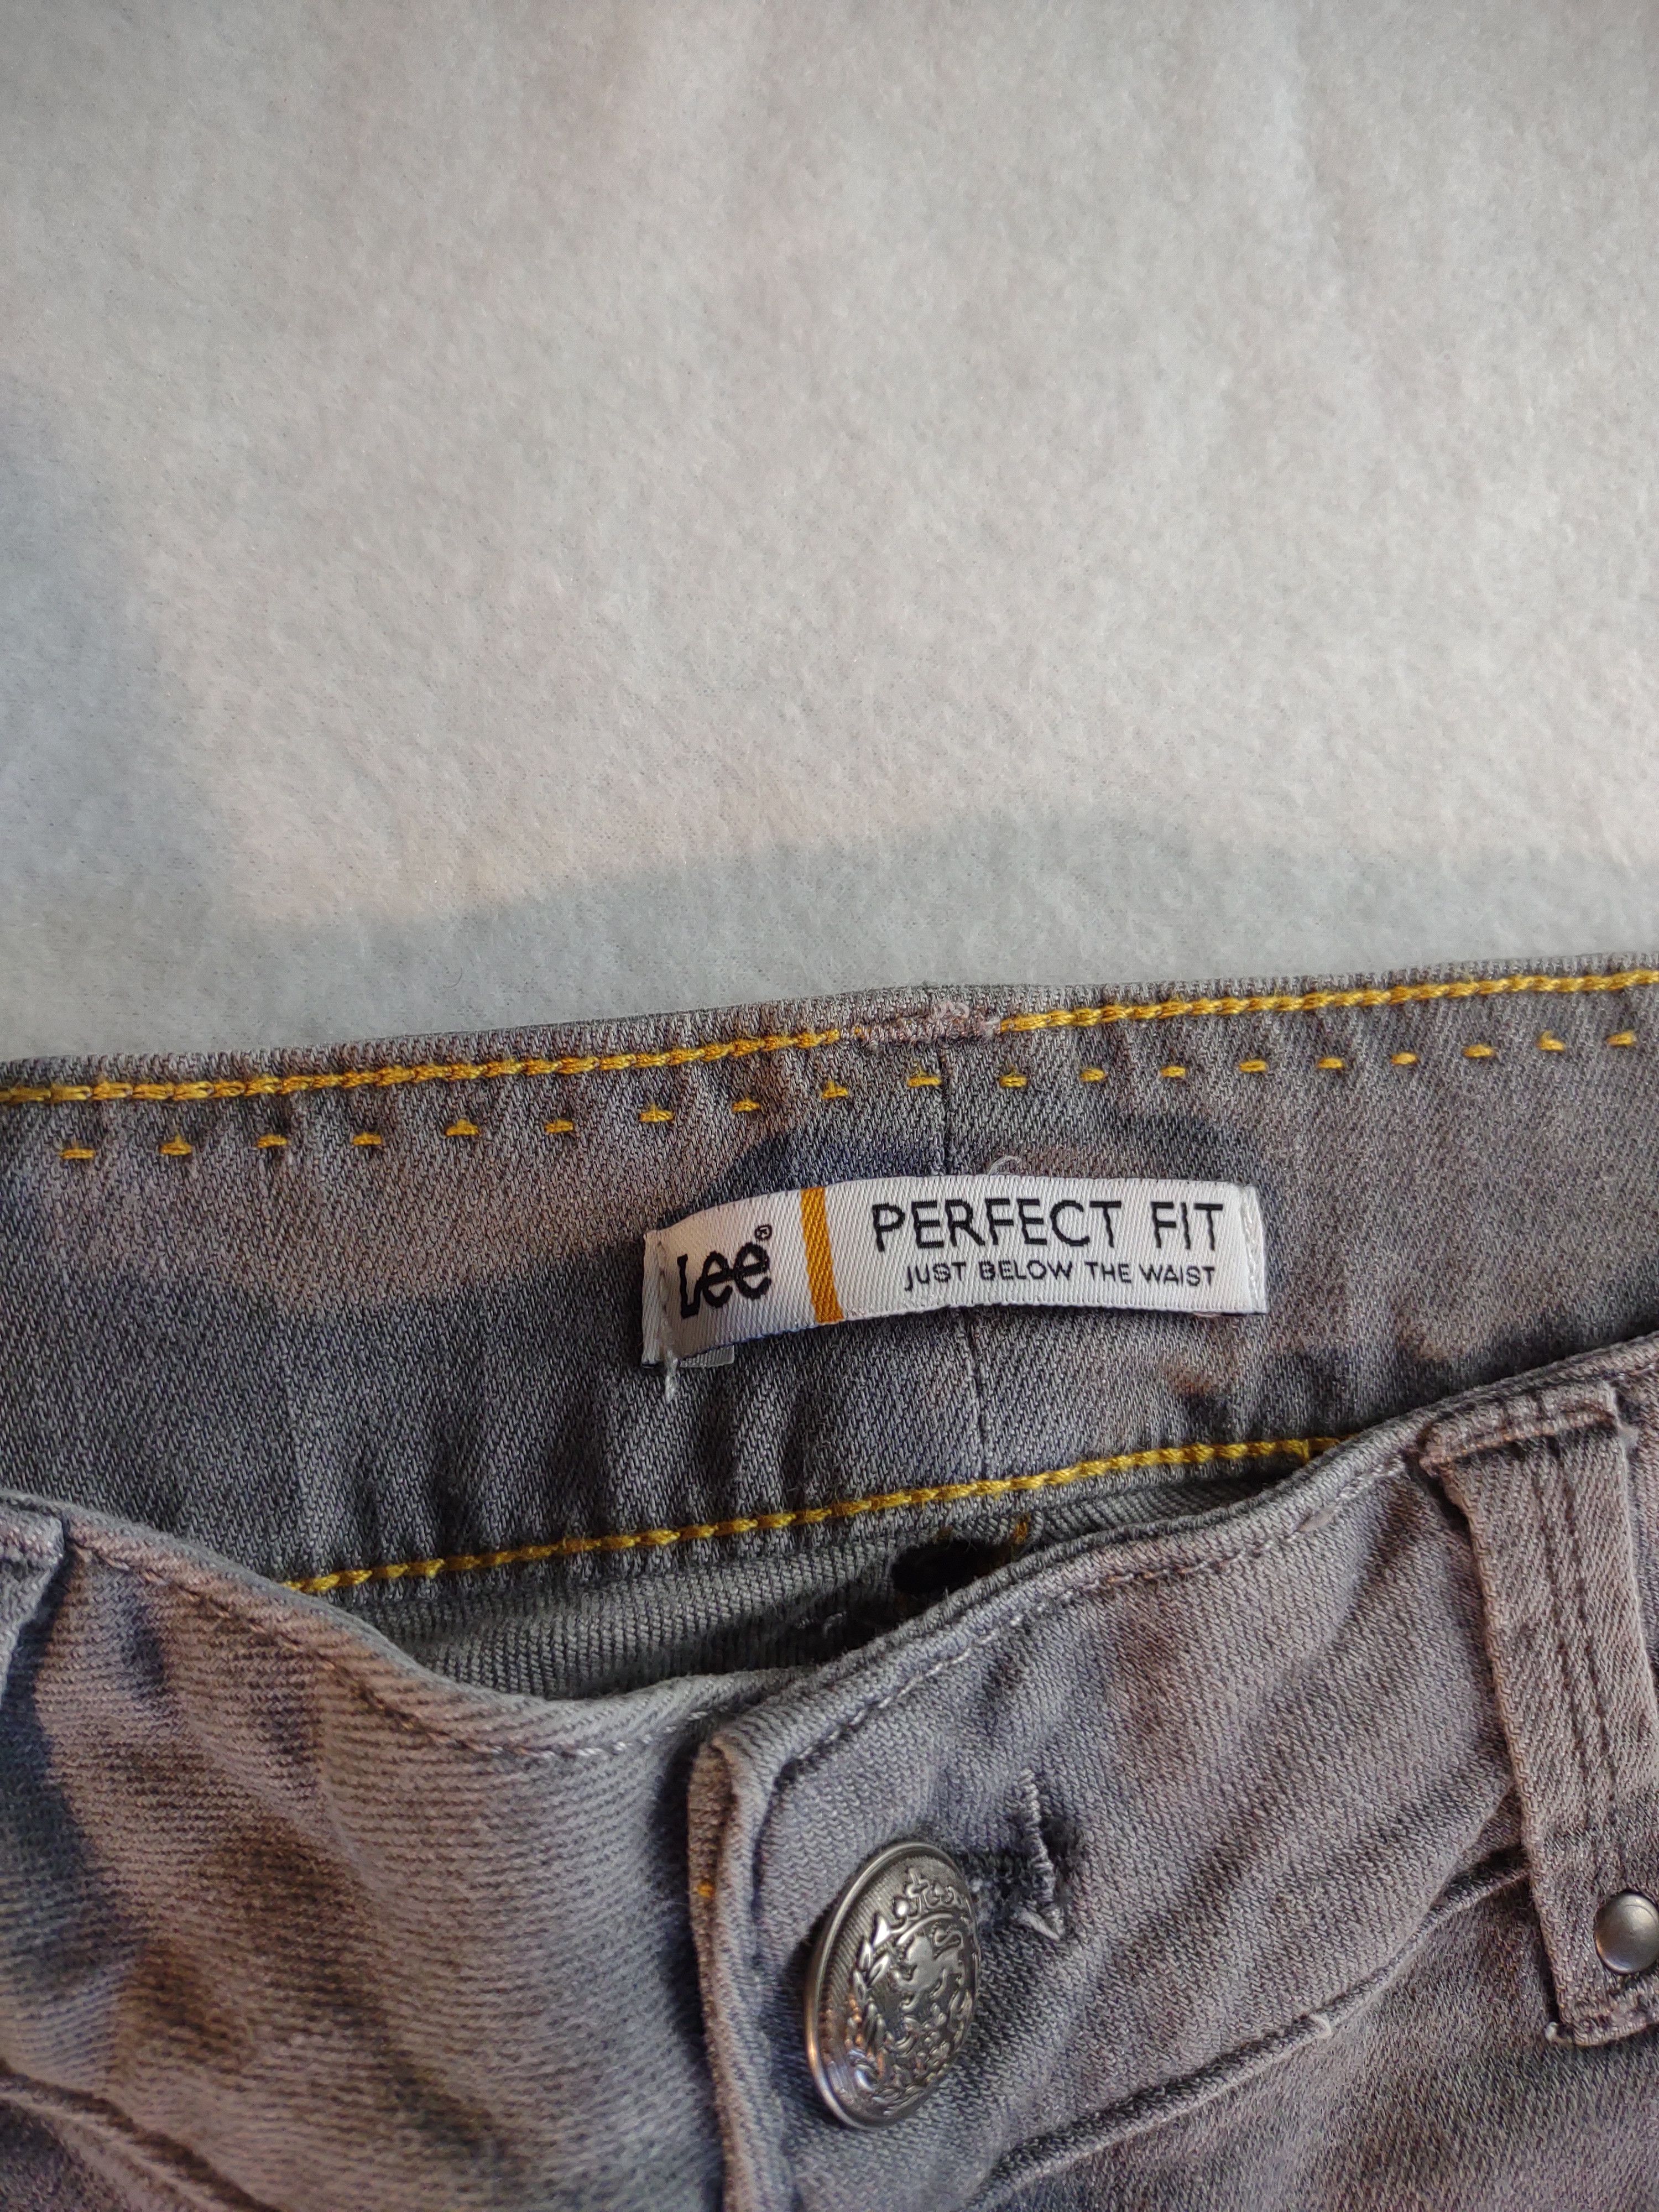 Lee Lee Perfect Fit Just Below Waist denim jeans gray ash wash Size 28" / US 6 / IT 42 - 10 Thumbnail